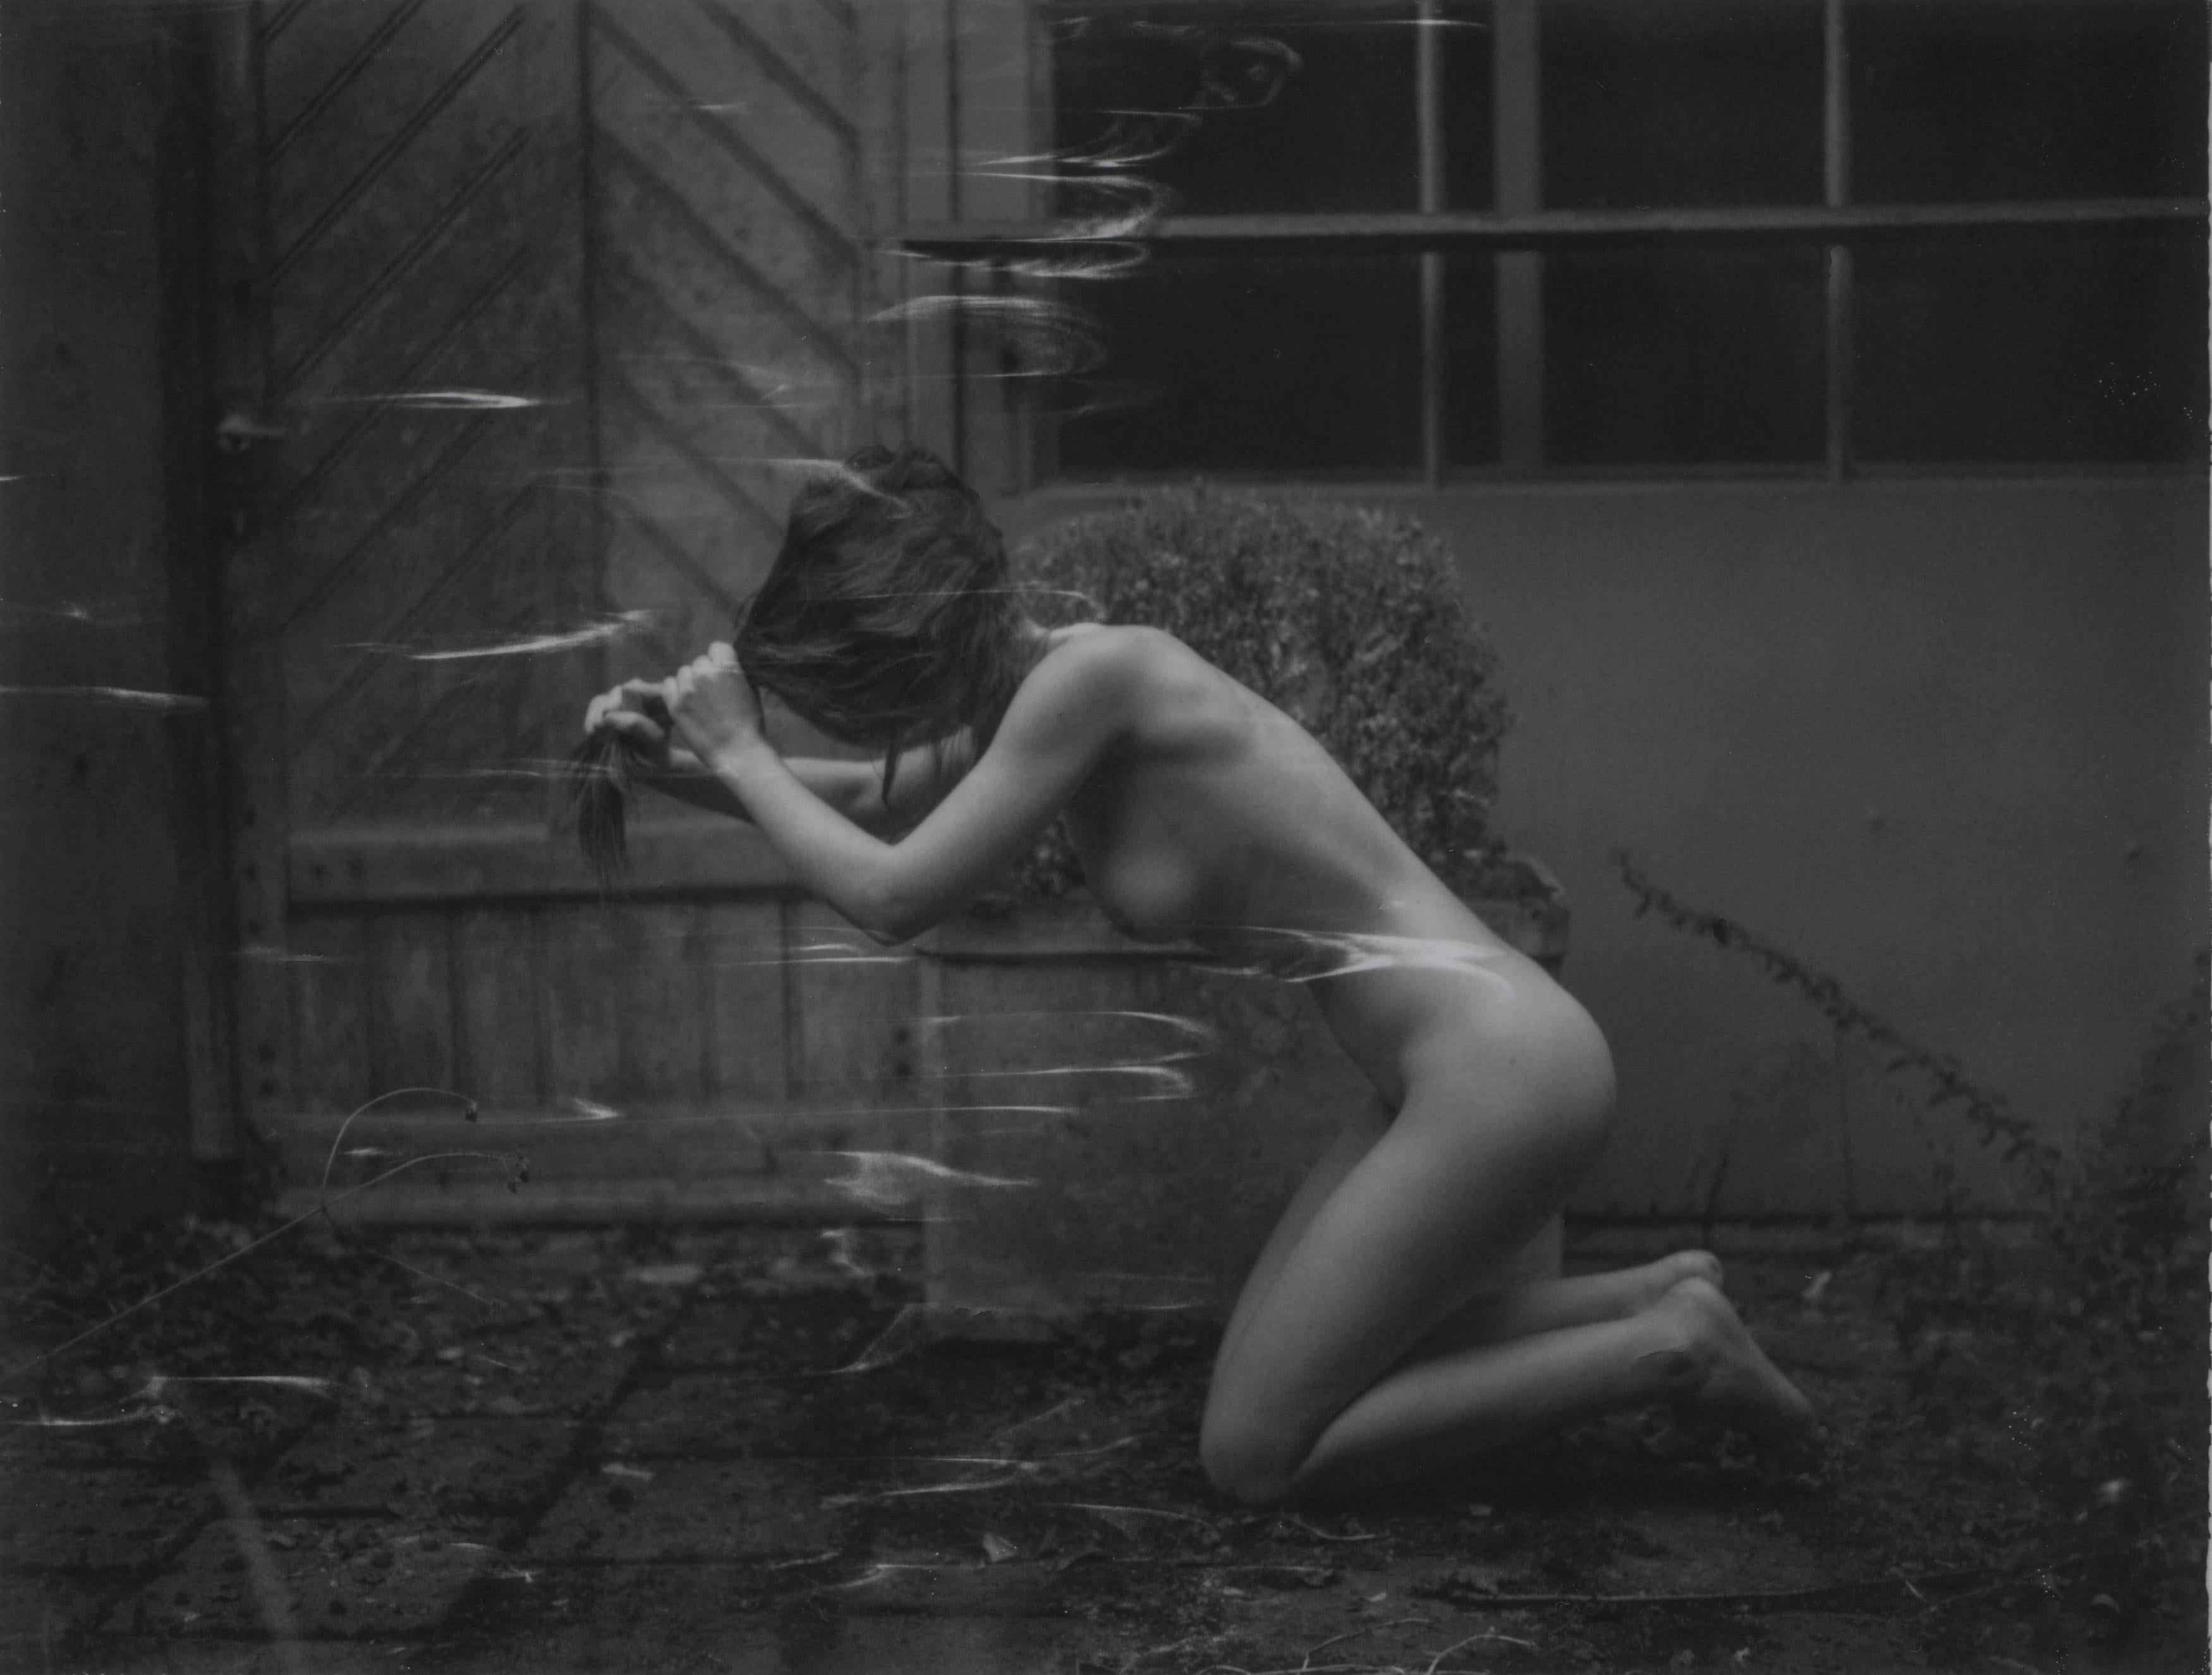 Kirsten Thys van den Audenaerde Color Photograph - Tug of war  - Contemporary, Nude, Women, Polaroid, 21st Century